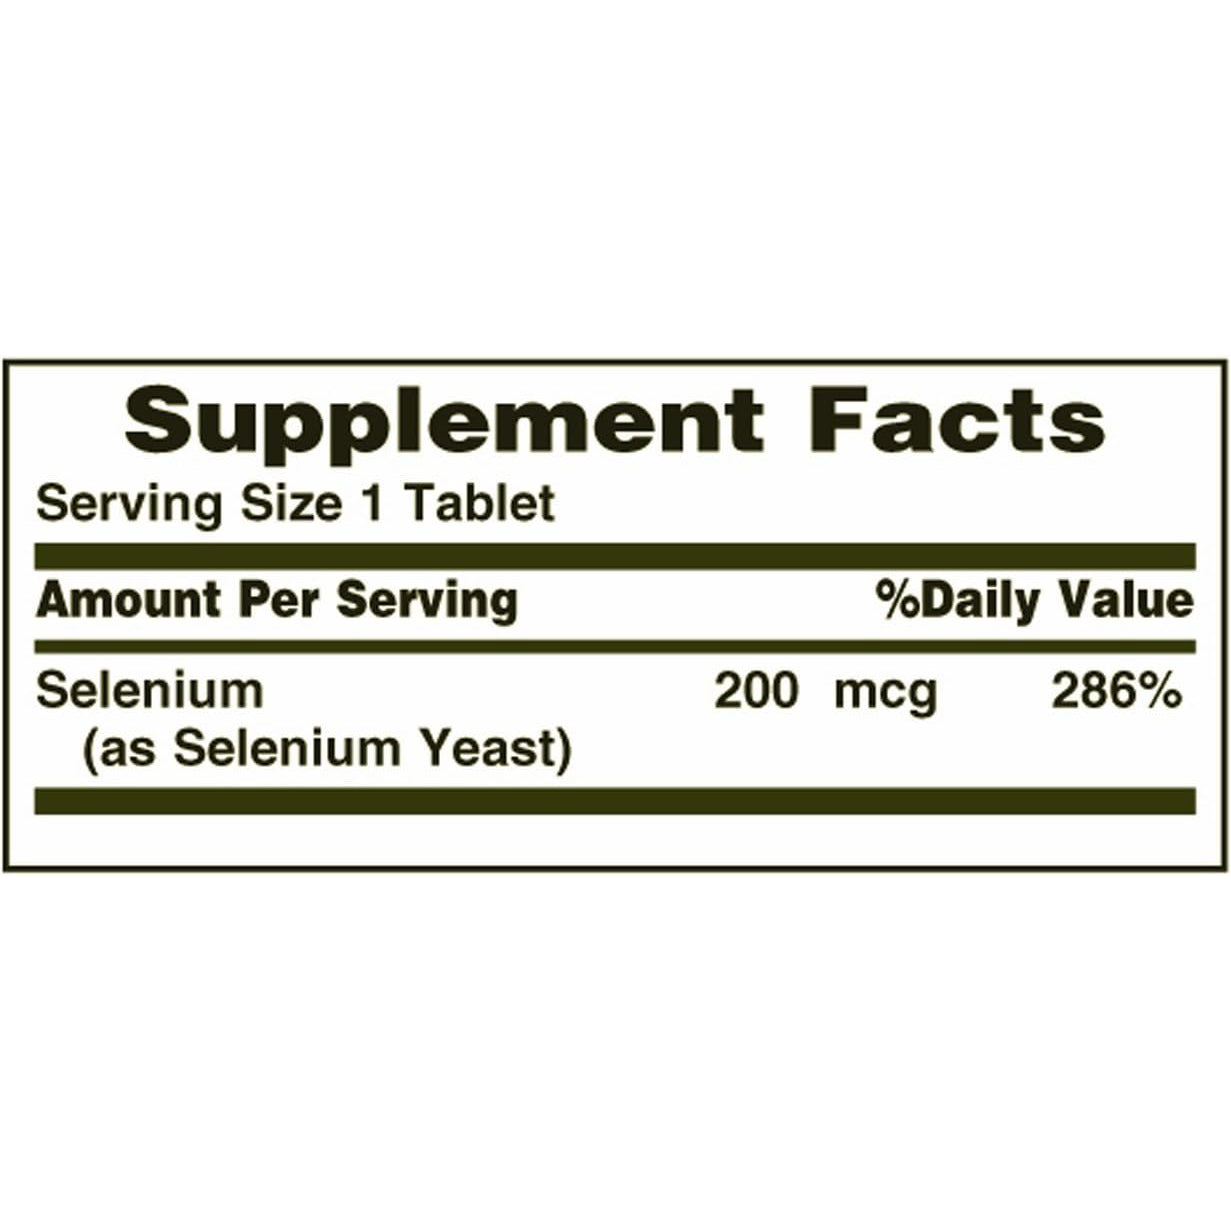 Nature's Bounty Selenium 200 mcg, 100 Vegetarian Tablets